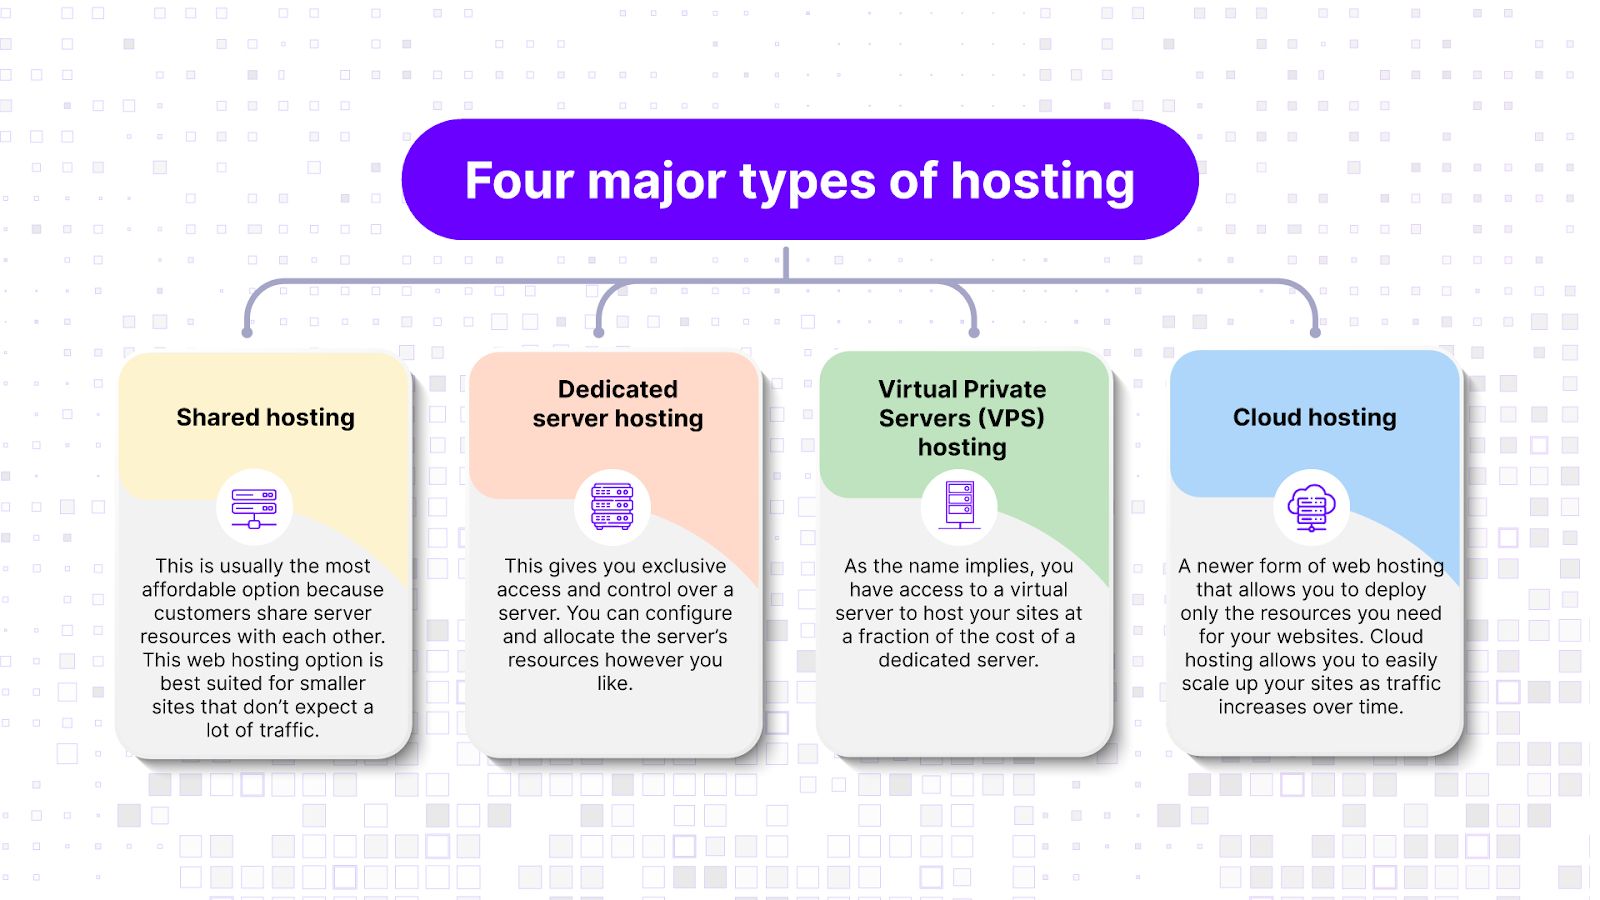 The four major types of hosting: shared hosting, dedicated server hosting, VPS hosting, and cloud hosting. 